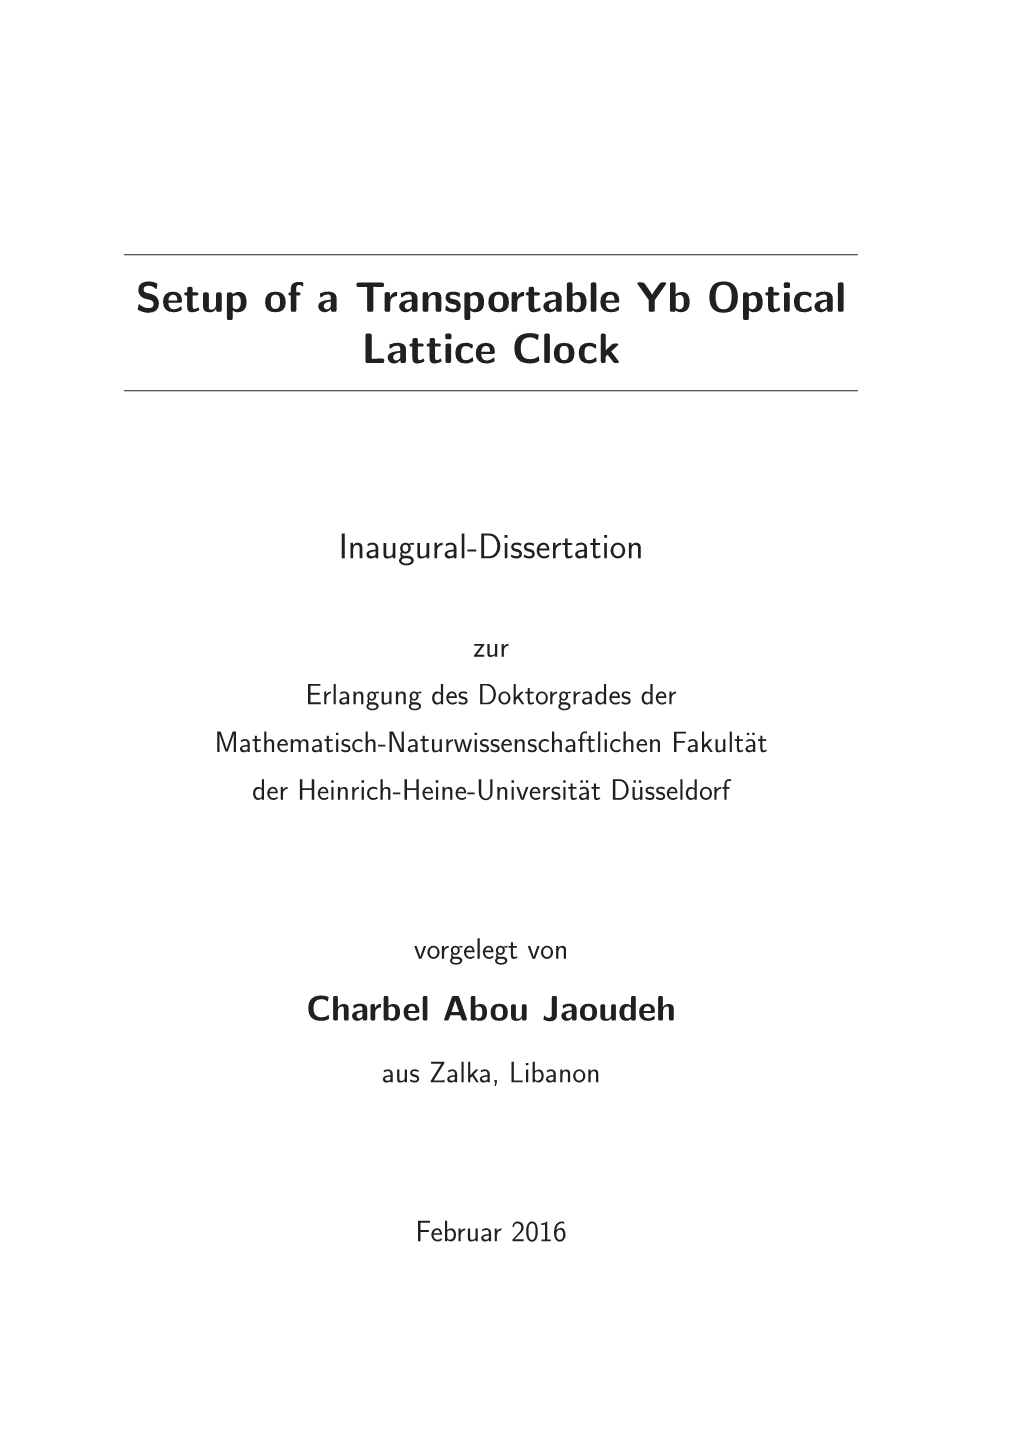 Setup of a Transportable Yb Optical Lattice Clock